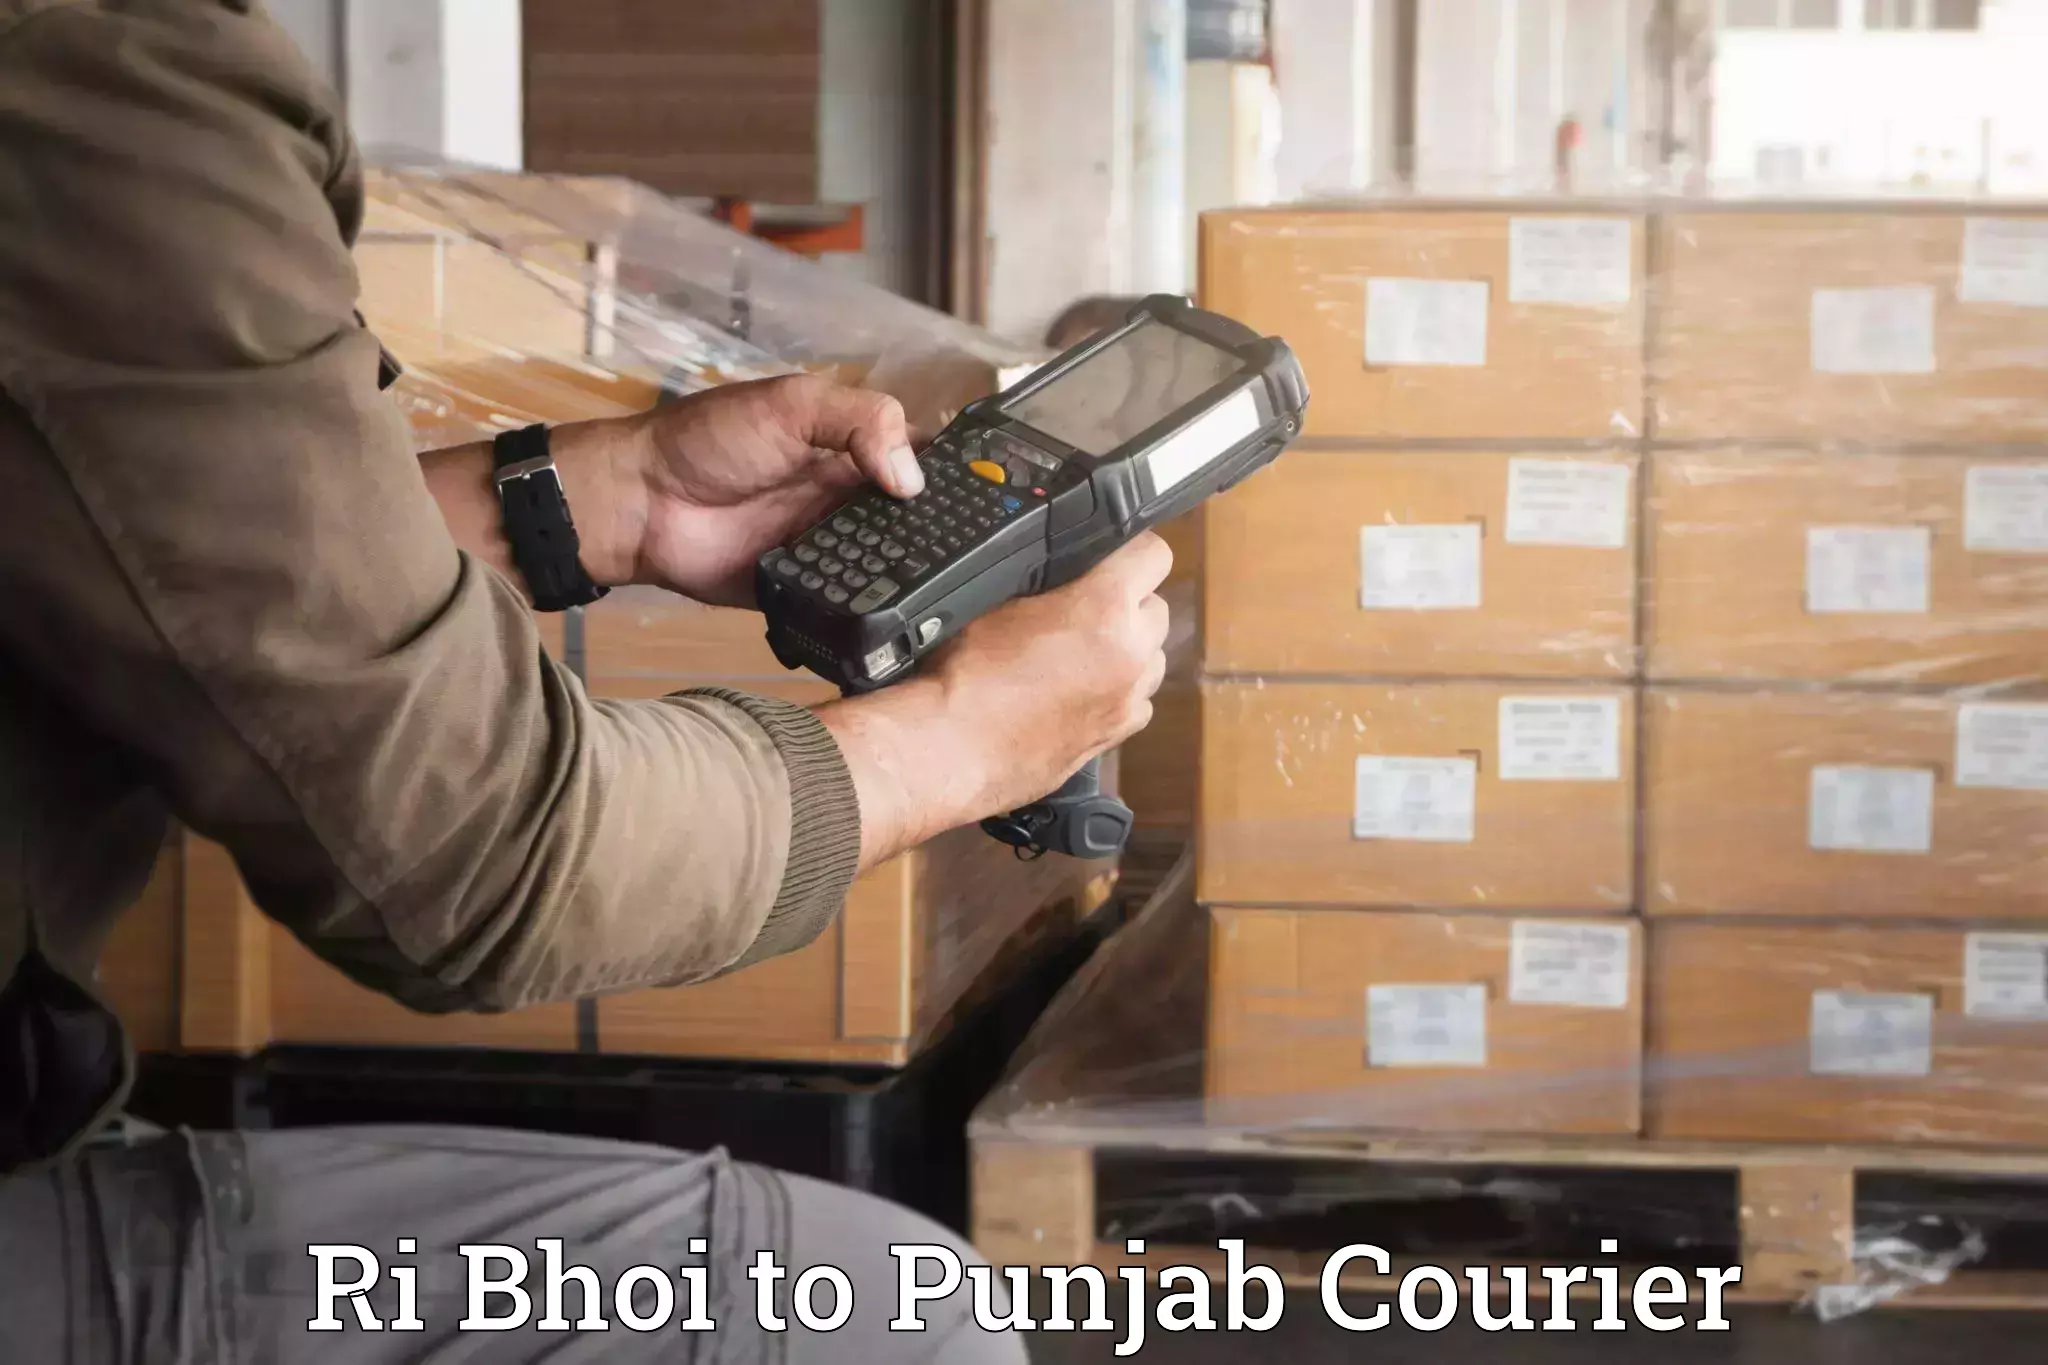 Efficient moving services Ri Bhoi to Punjab